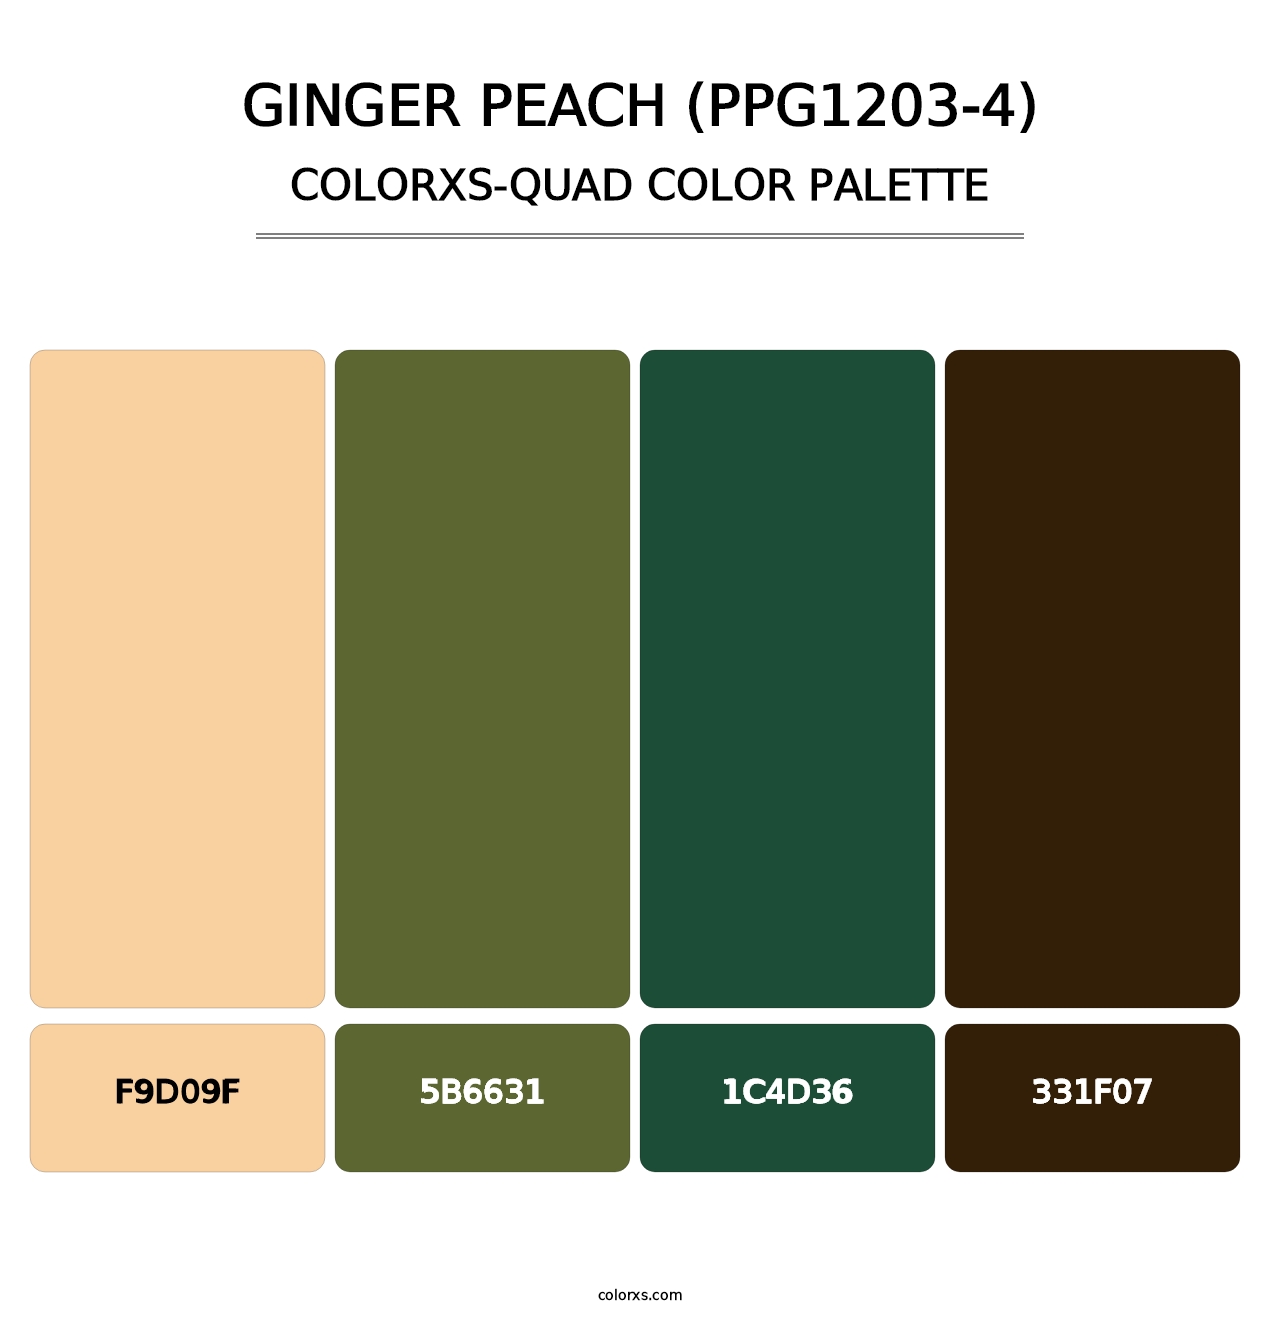 Ginger Peach (PPG1203-4) - Colorxs Quad Palette